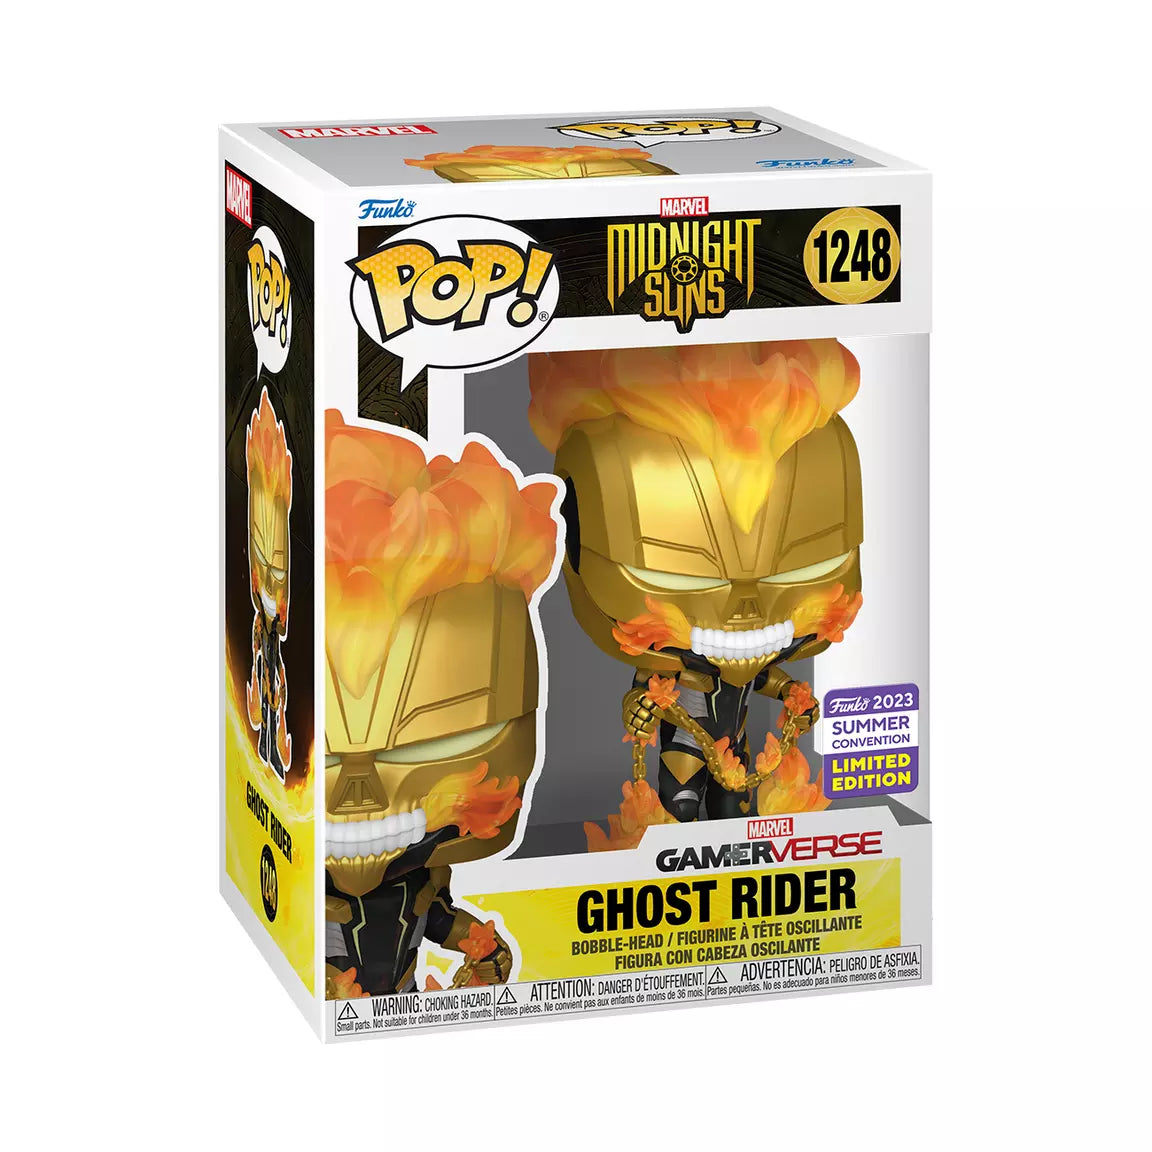 Pop! Midnight Suns Ghost Rider